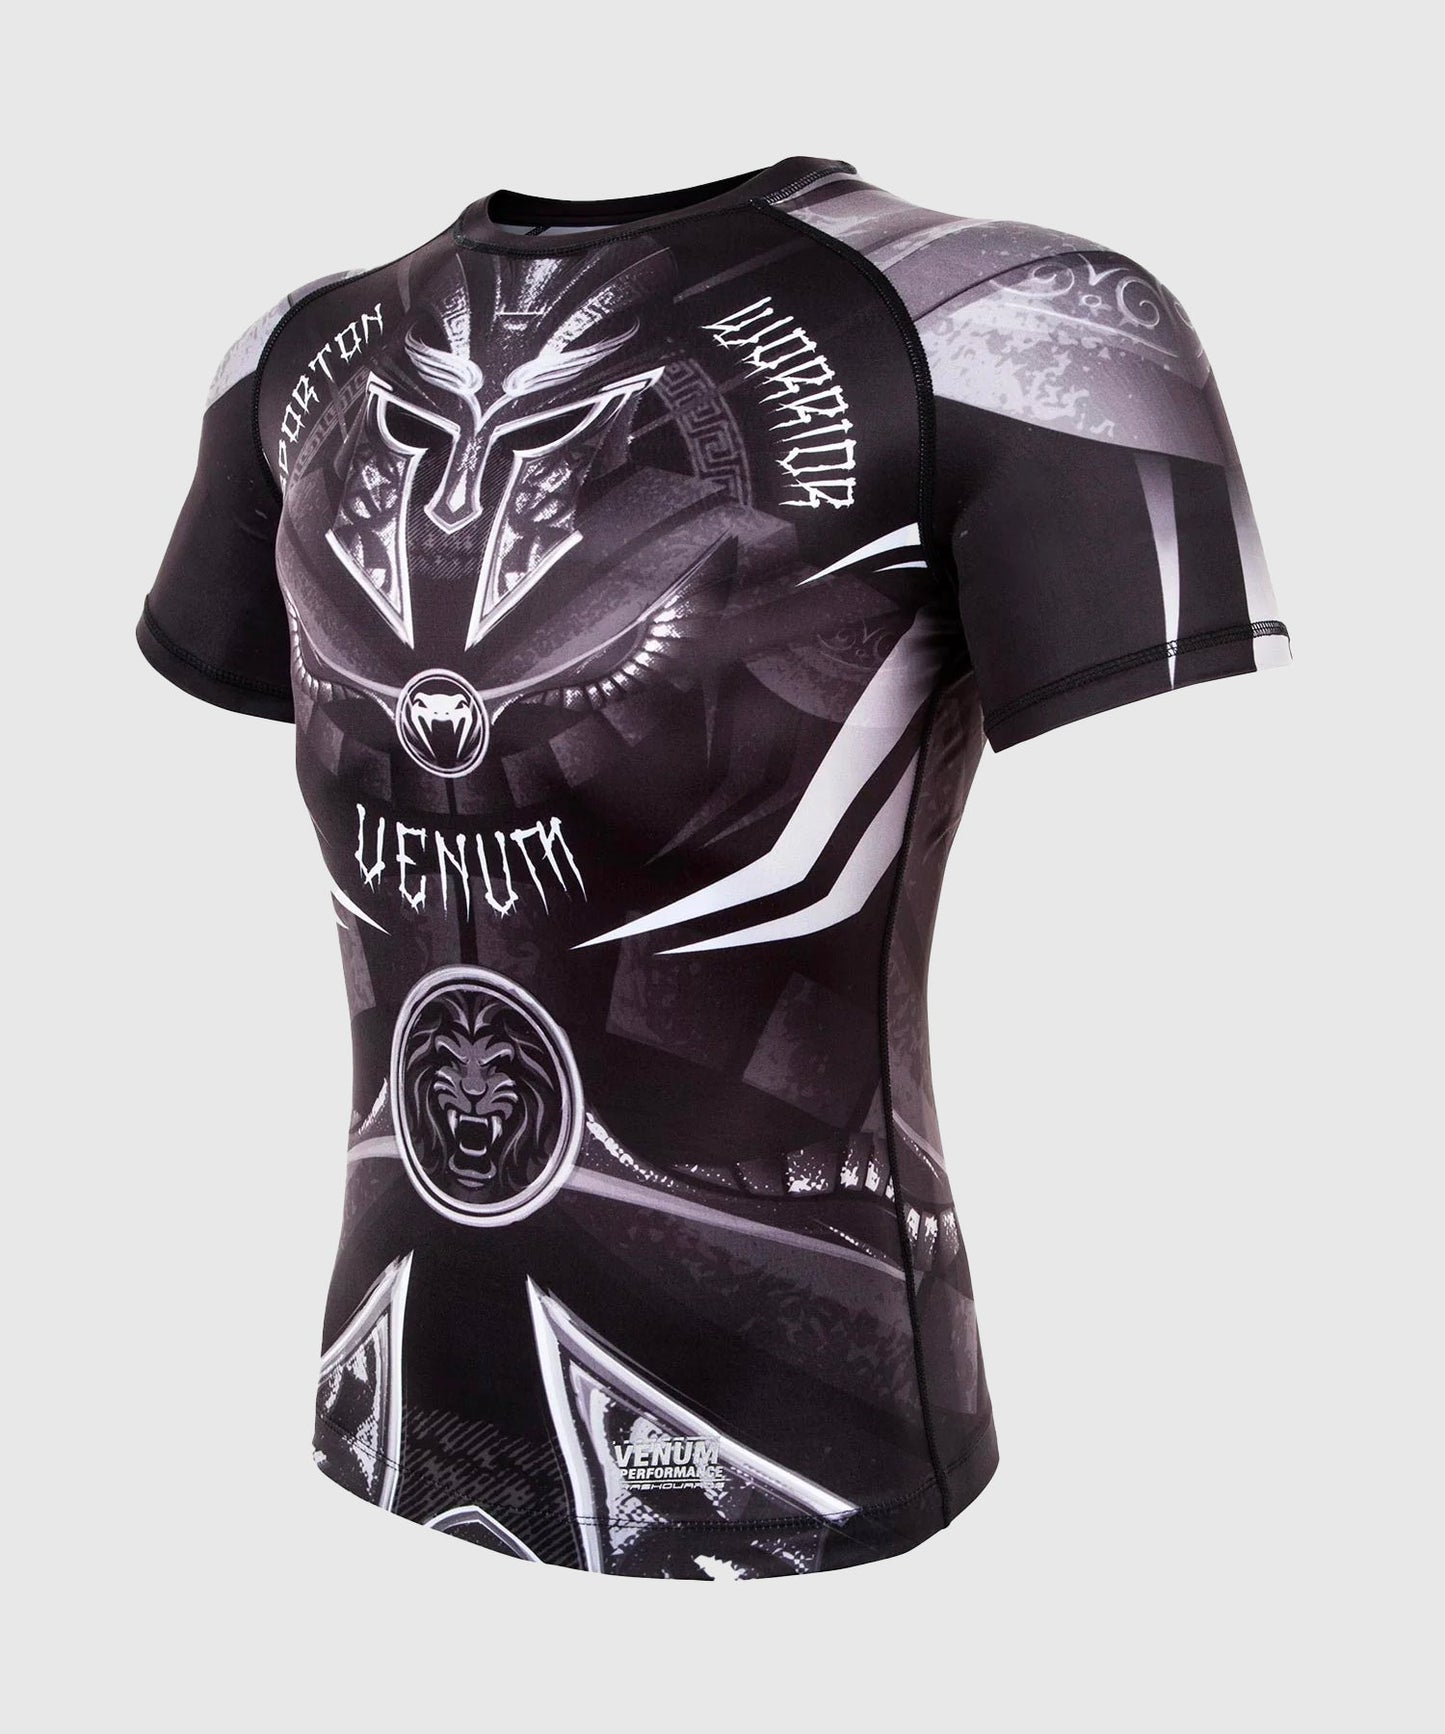 Venum Gladiator 3.0 Rashguard - Black/White - Short Sleeves